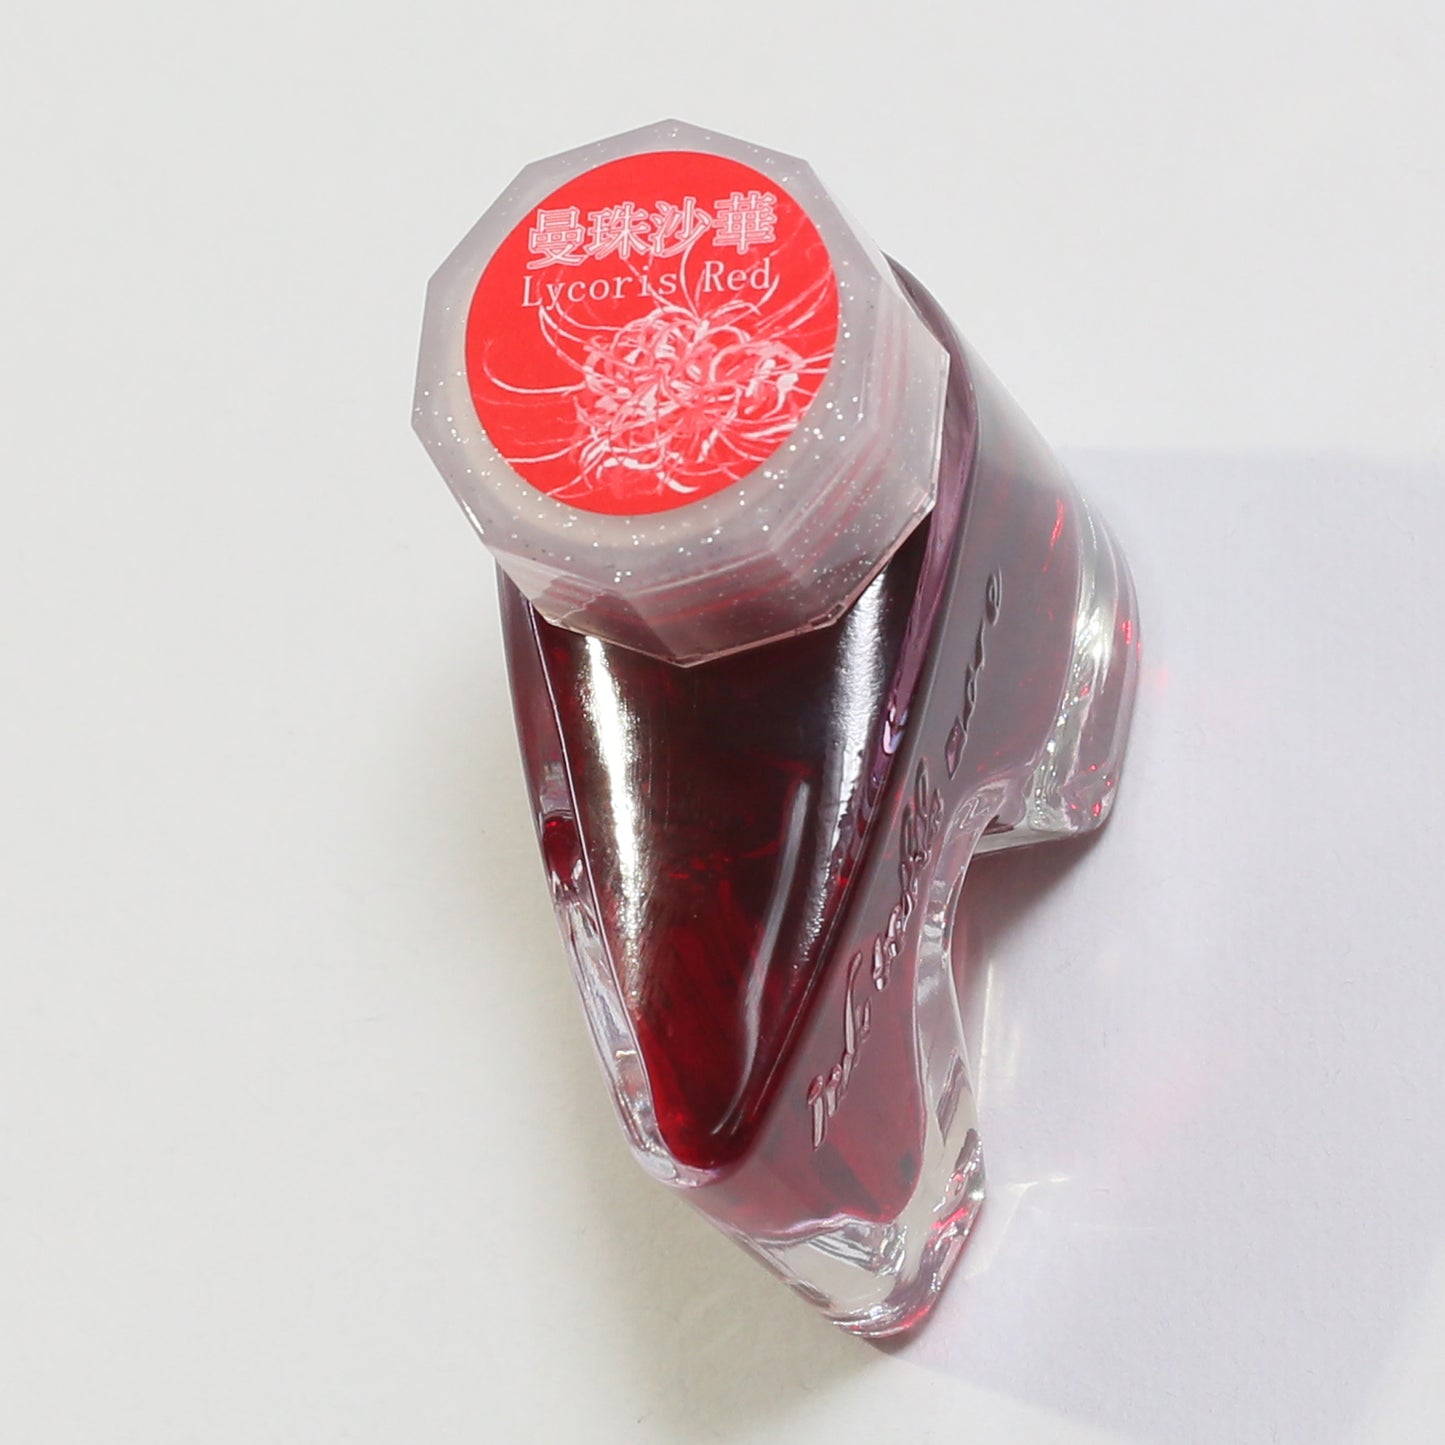 Ink tells more "Lycoris Red"